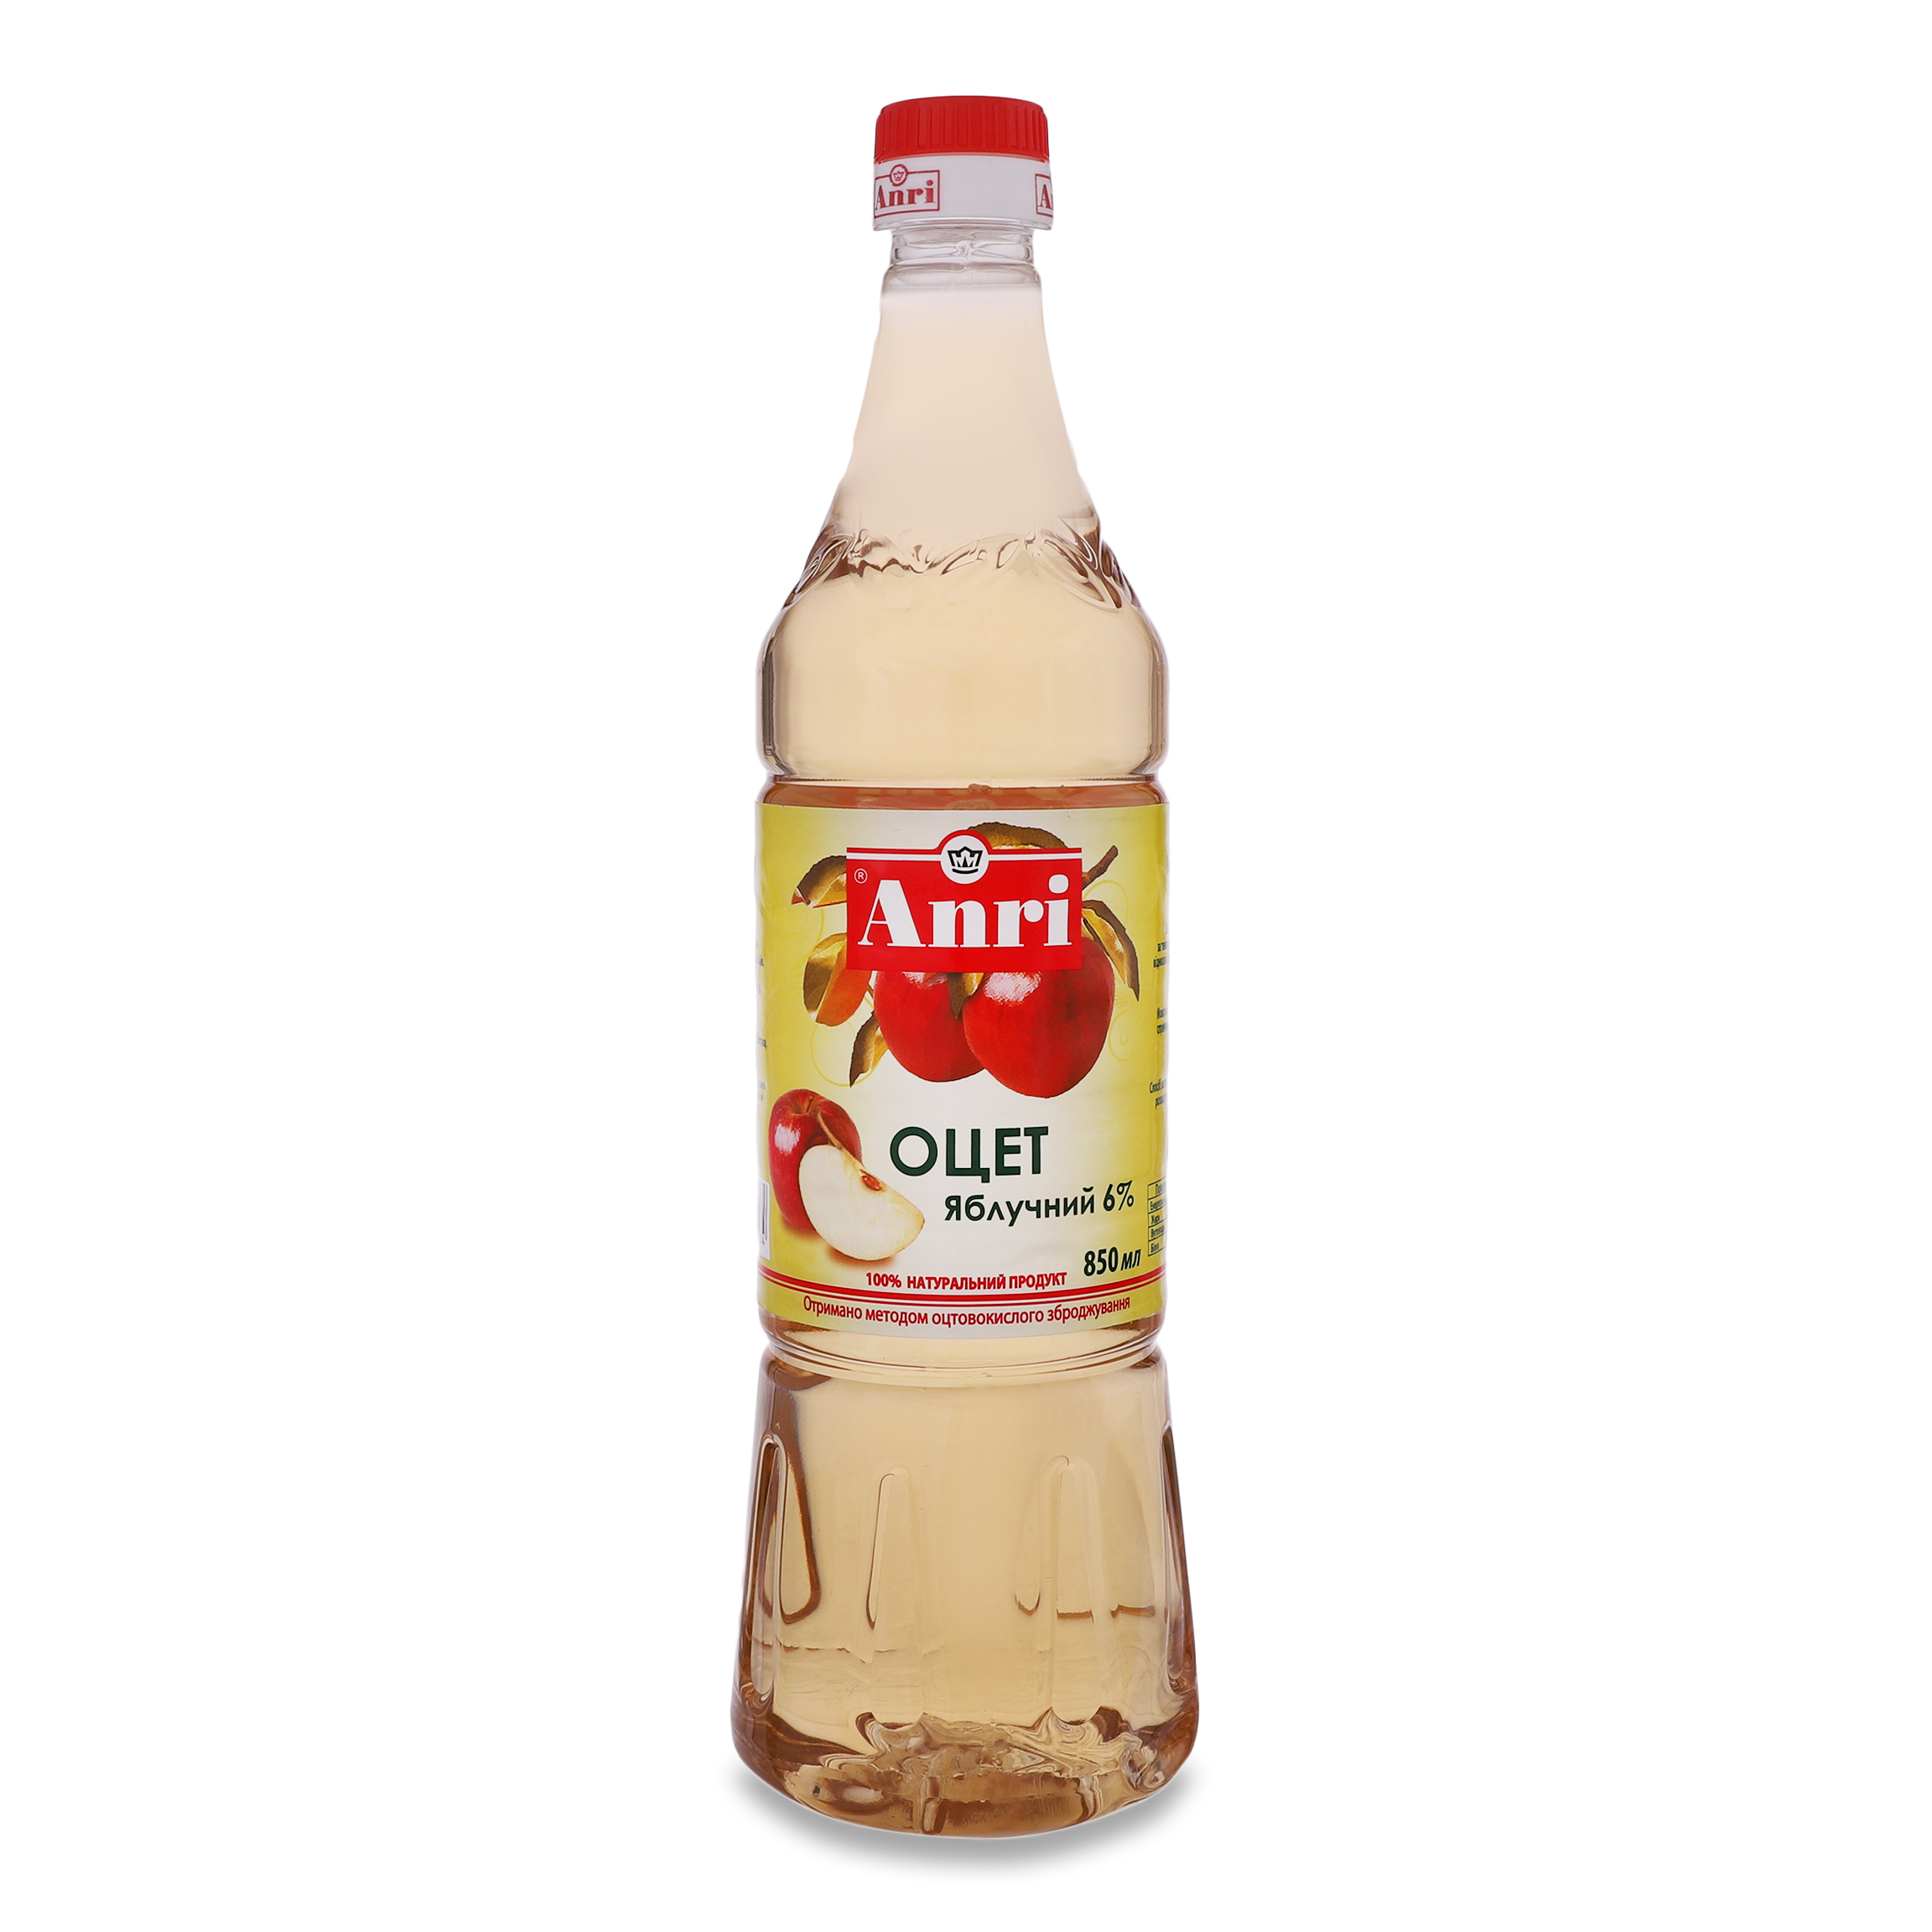 ANRI Apple Vinegar 850ml